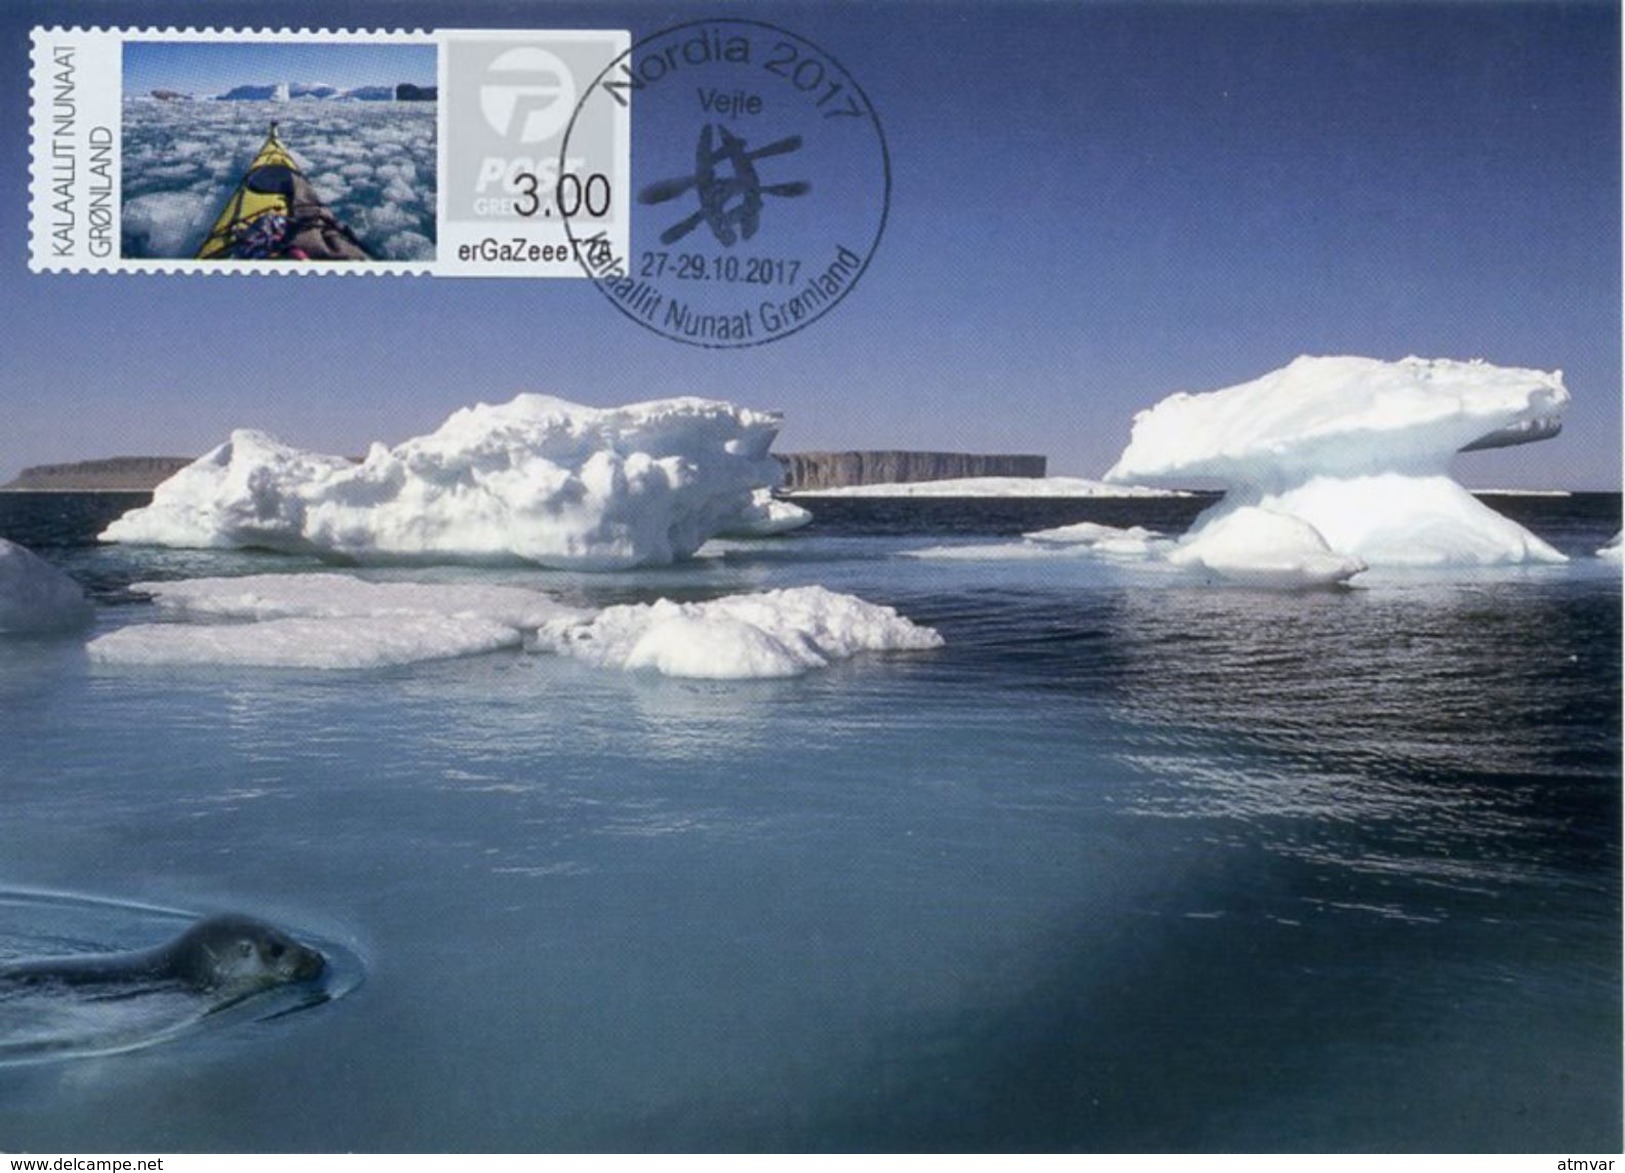 GREENLAND GROENLAND (2017) - Carte Maximum Card ATM - Harp Seal In Greenlandic Waters, Phoque, Iceberg, Kayak  - NORDIA - Machine Stamps